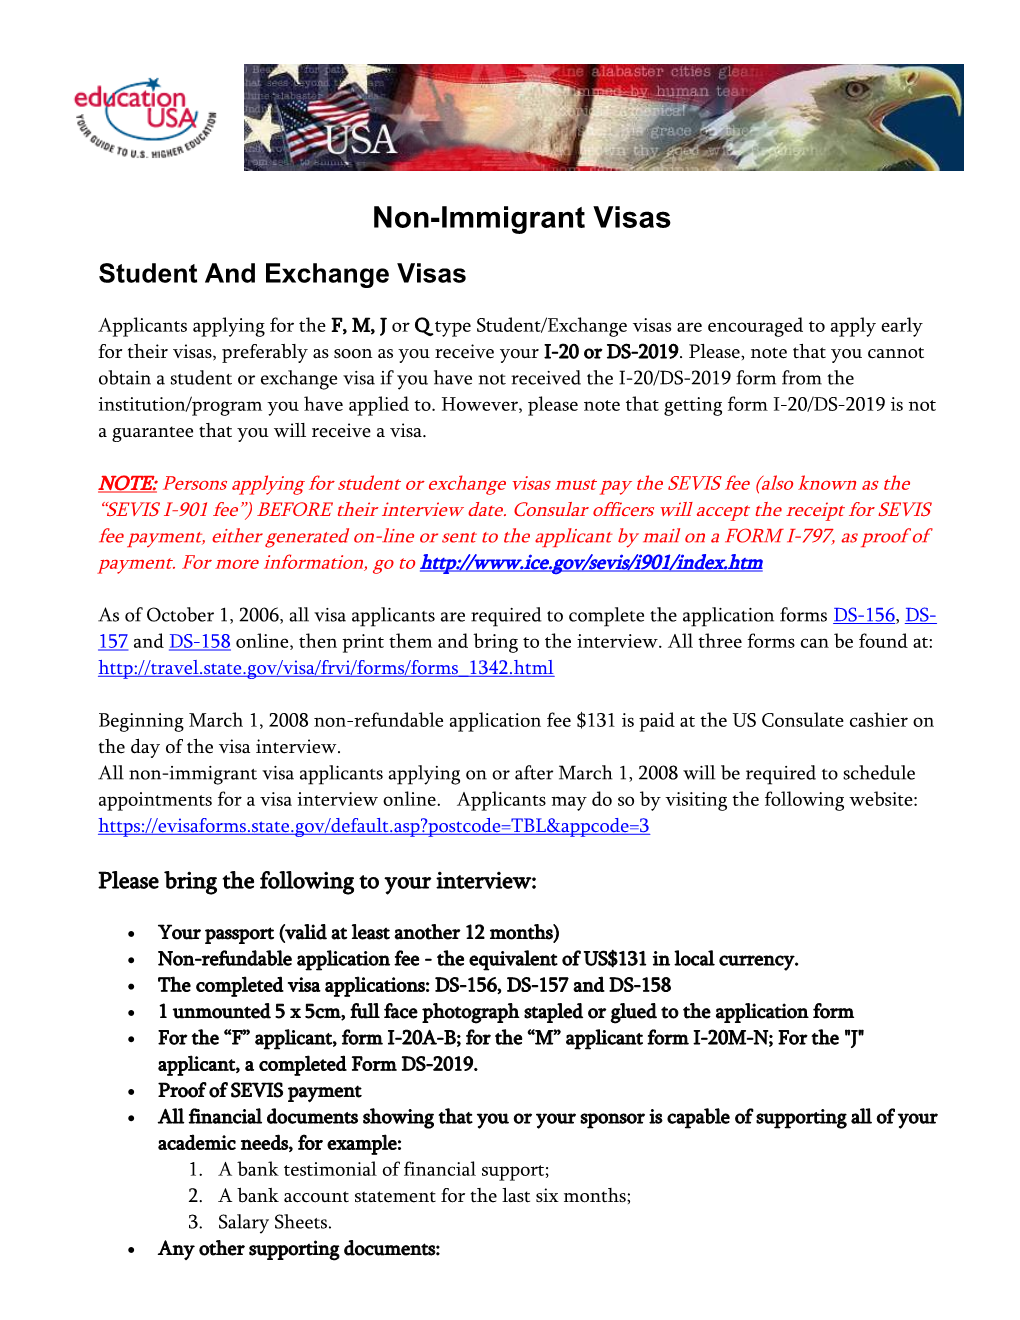 Student and Exchange Visas